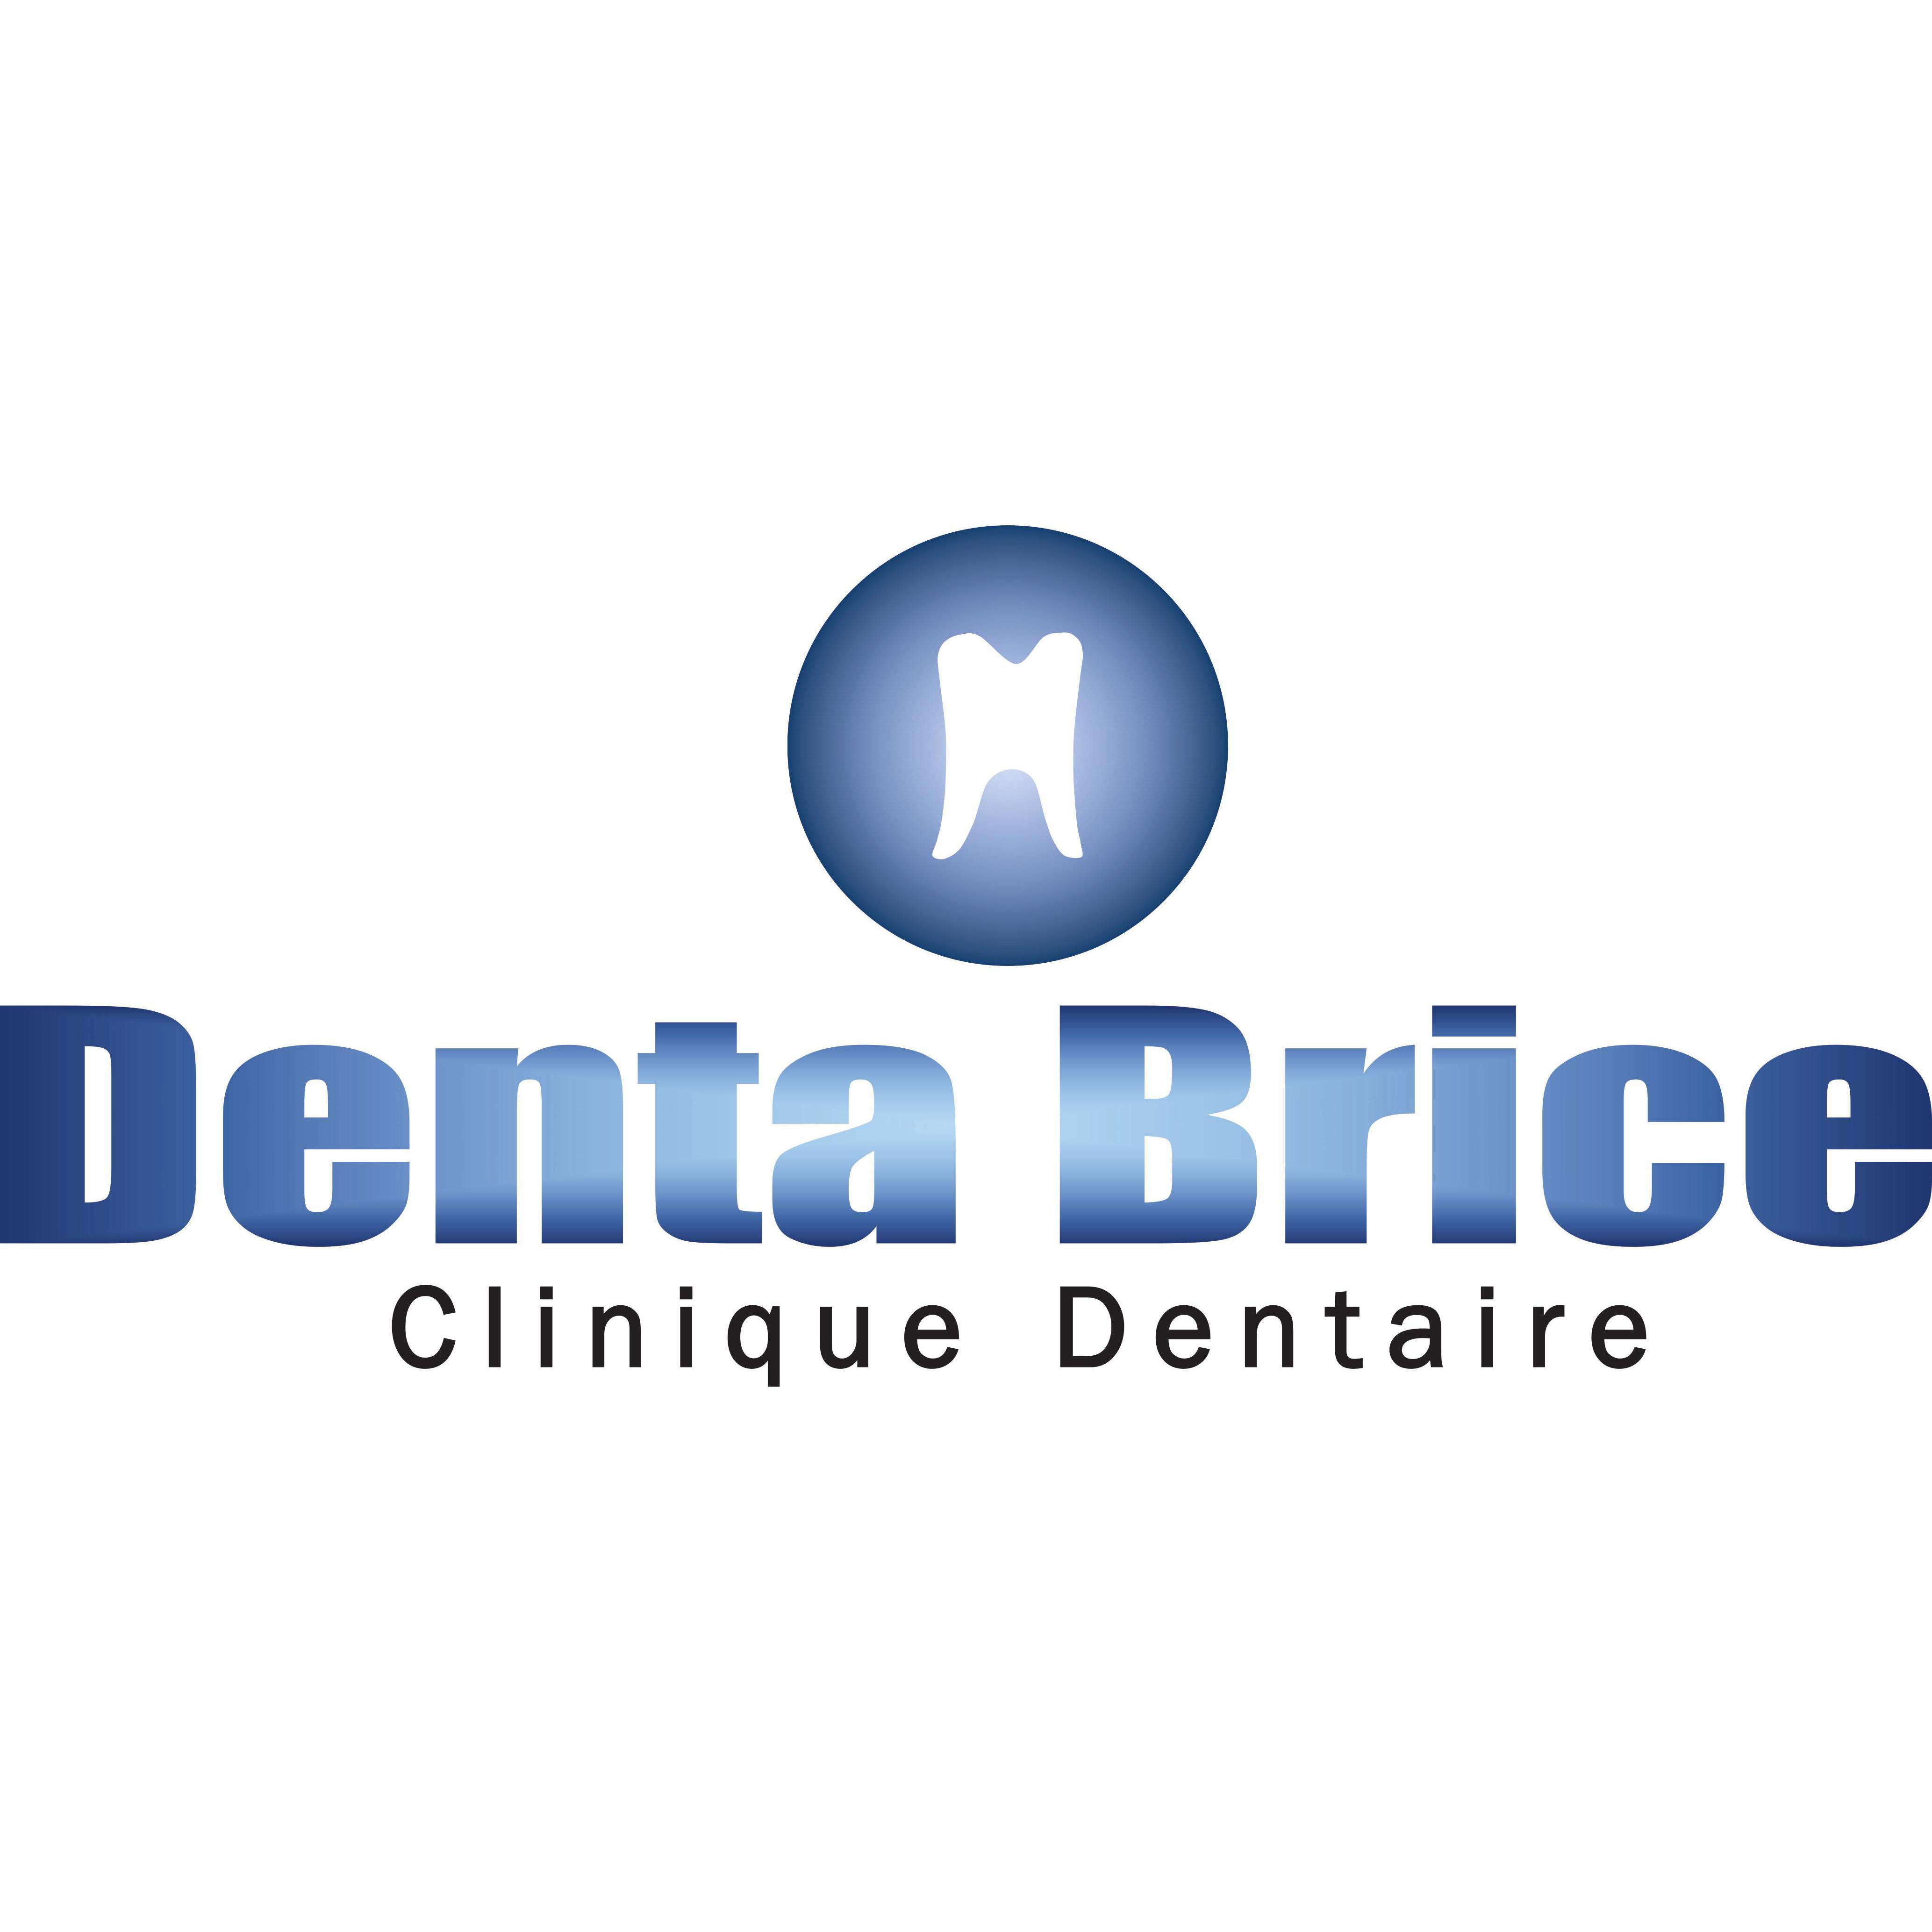 Denta Brice - Clinique Dentaire Logo